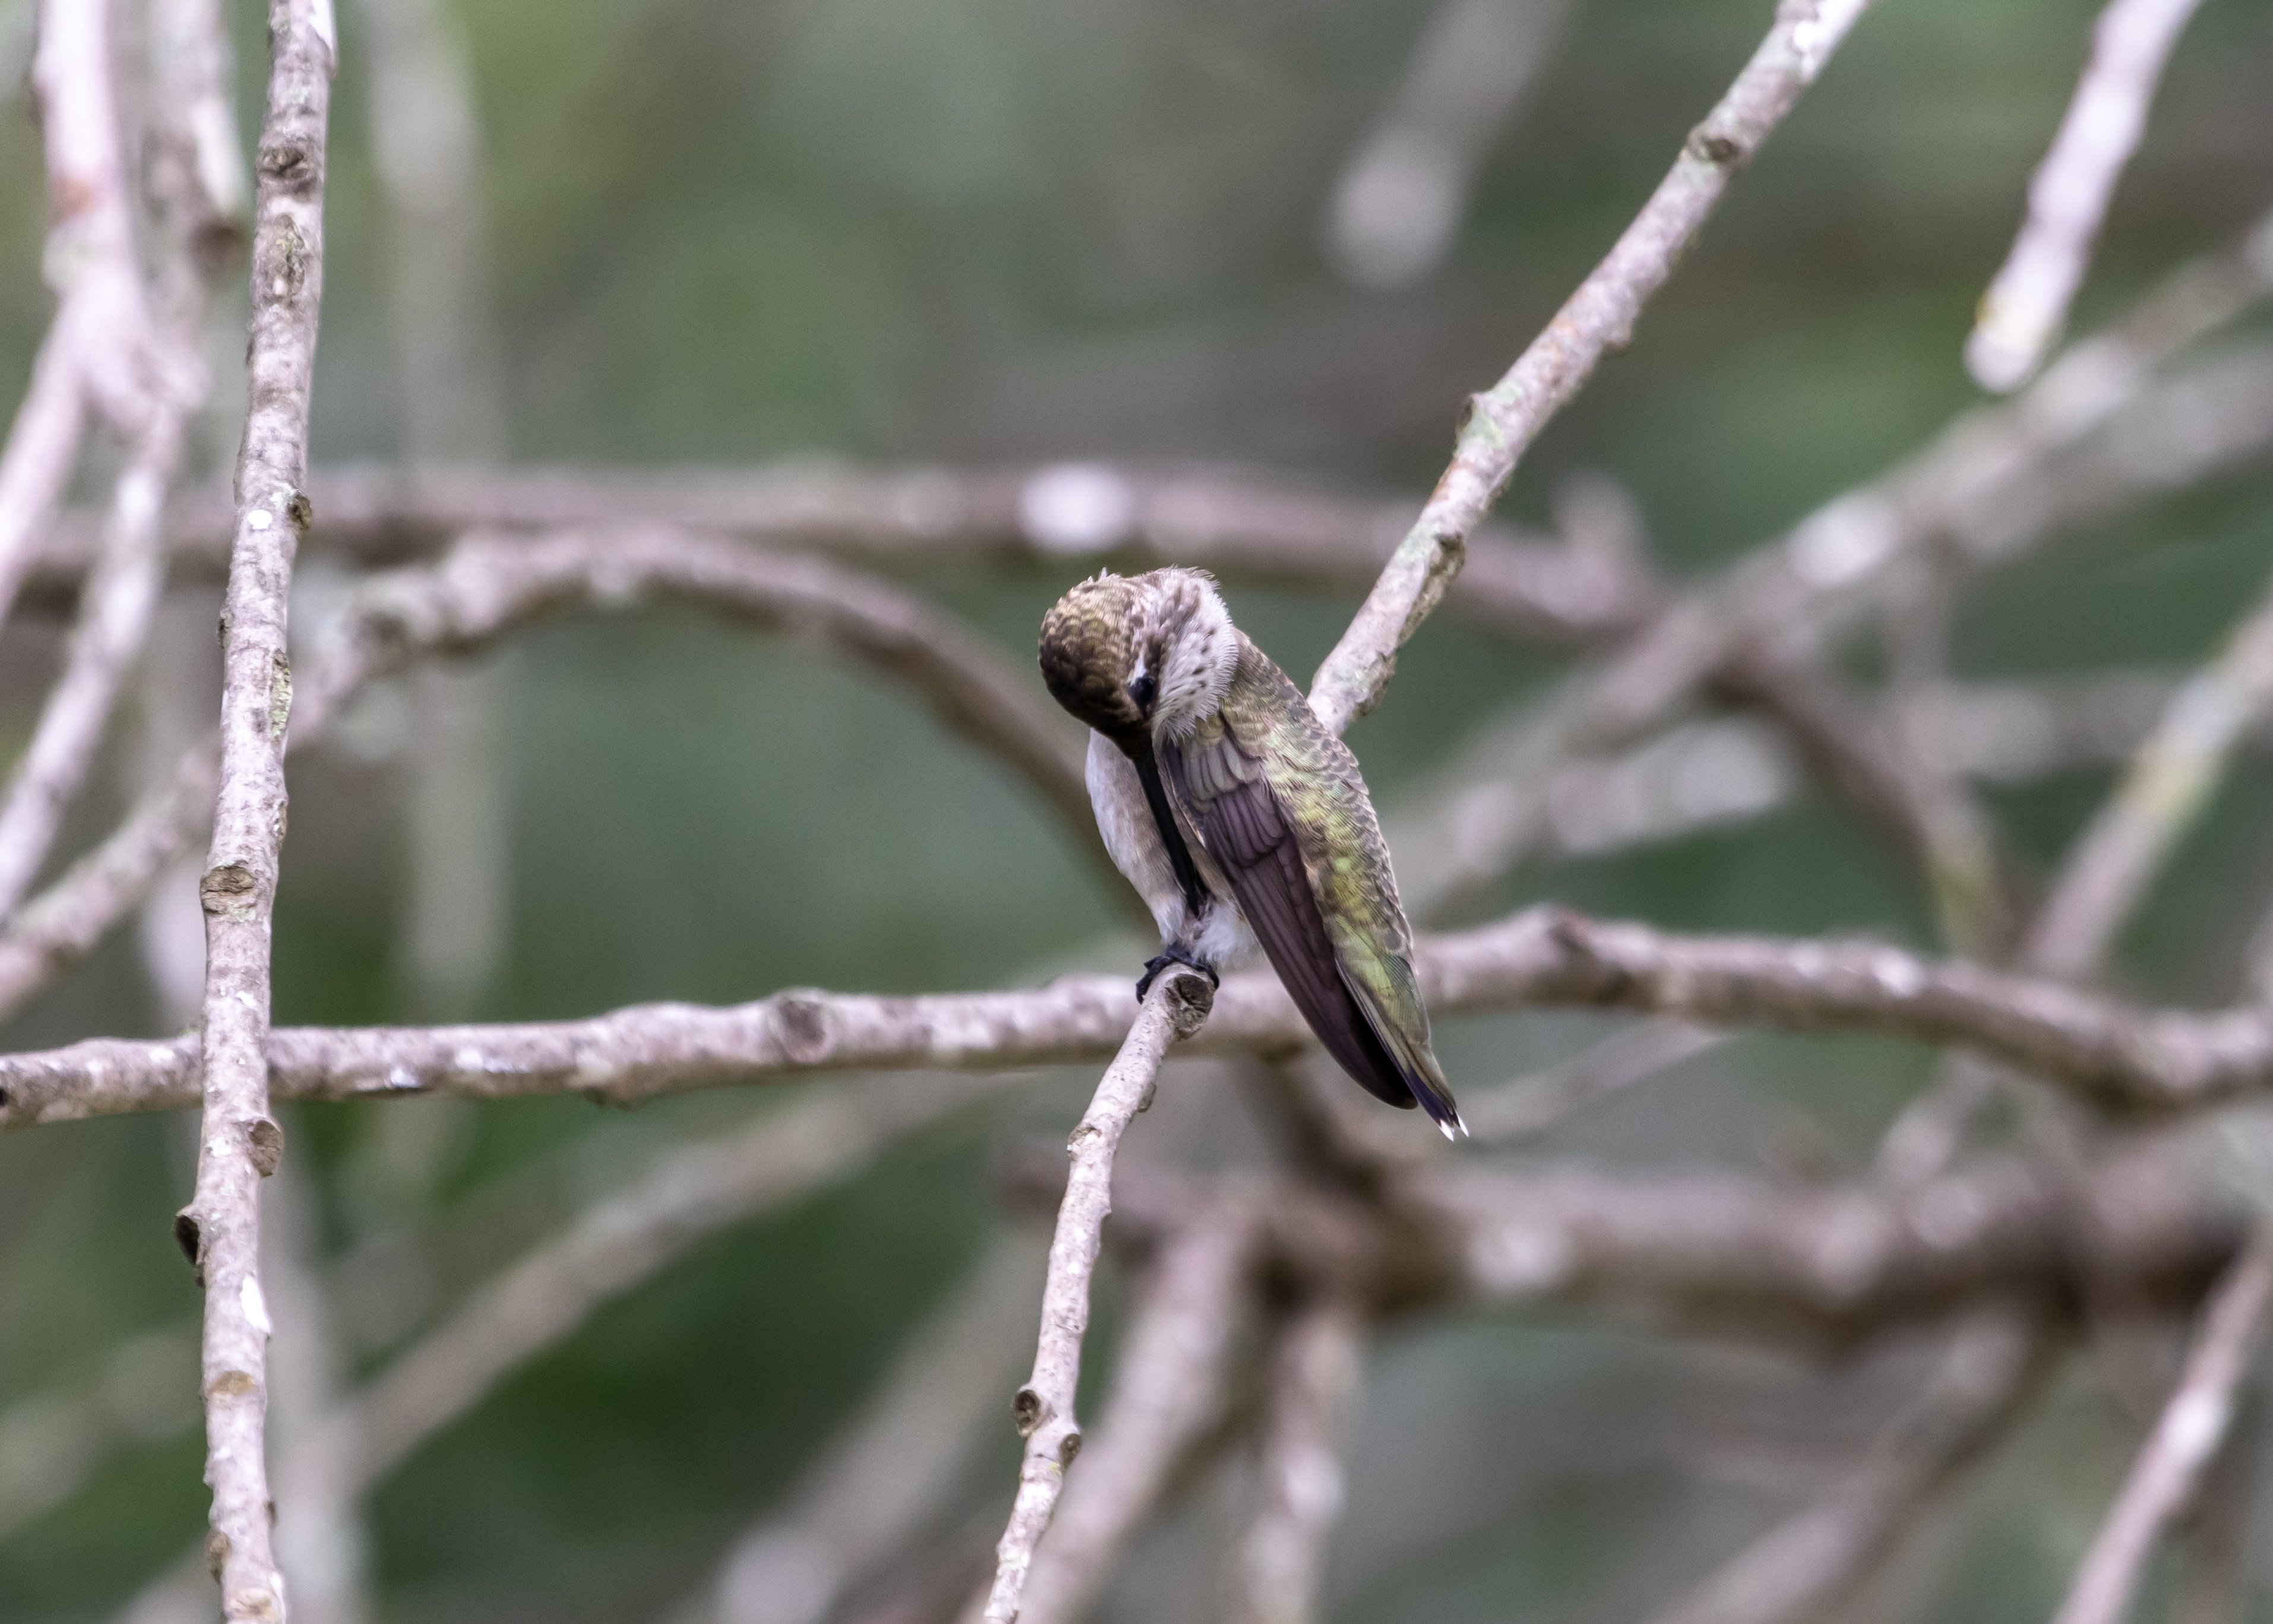 Hummingbird preening